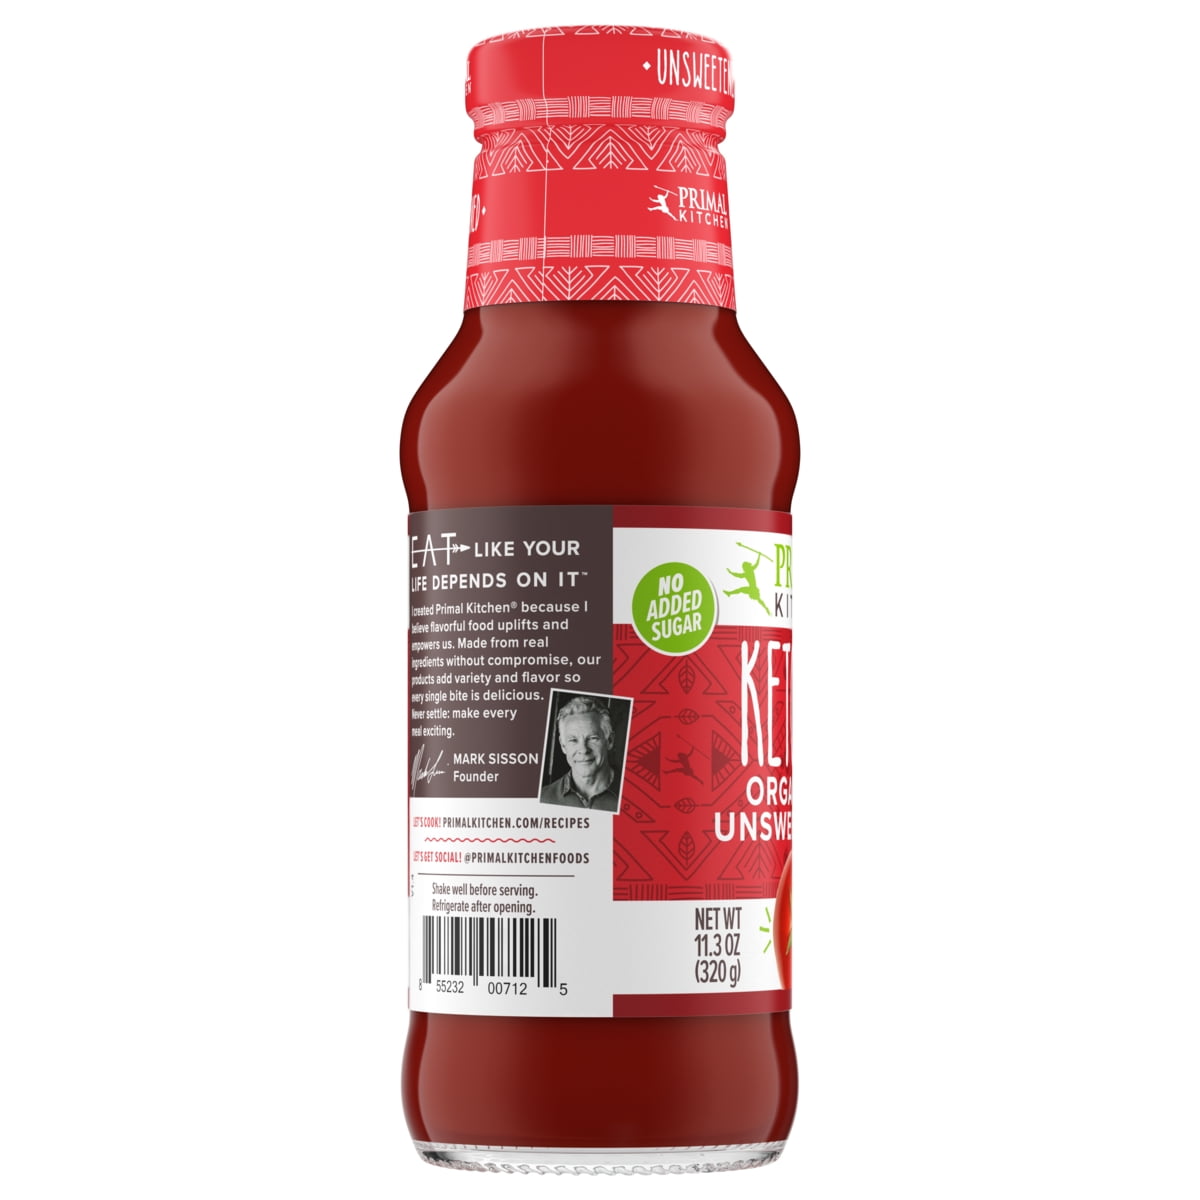 Primal Kitchen Gluten Free Organic Unsweetened Ketchup [6 Pack]